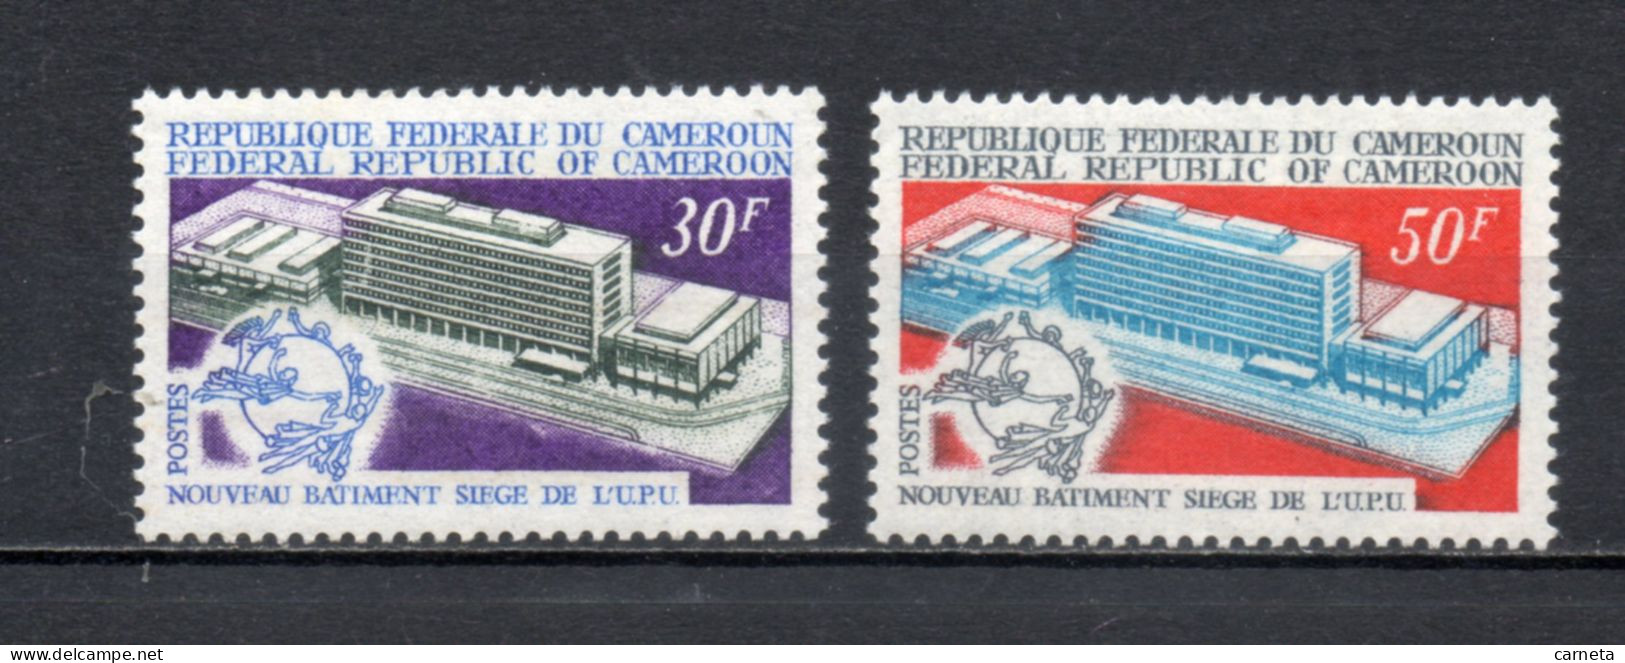 CAMEROUN N° 483 + 484  NEUFS SANS CHARNIERE COTE  2.50€     UPU - Cameroun (1960-...)